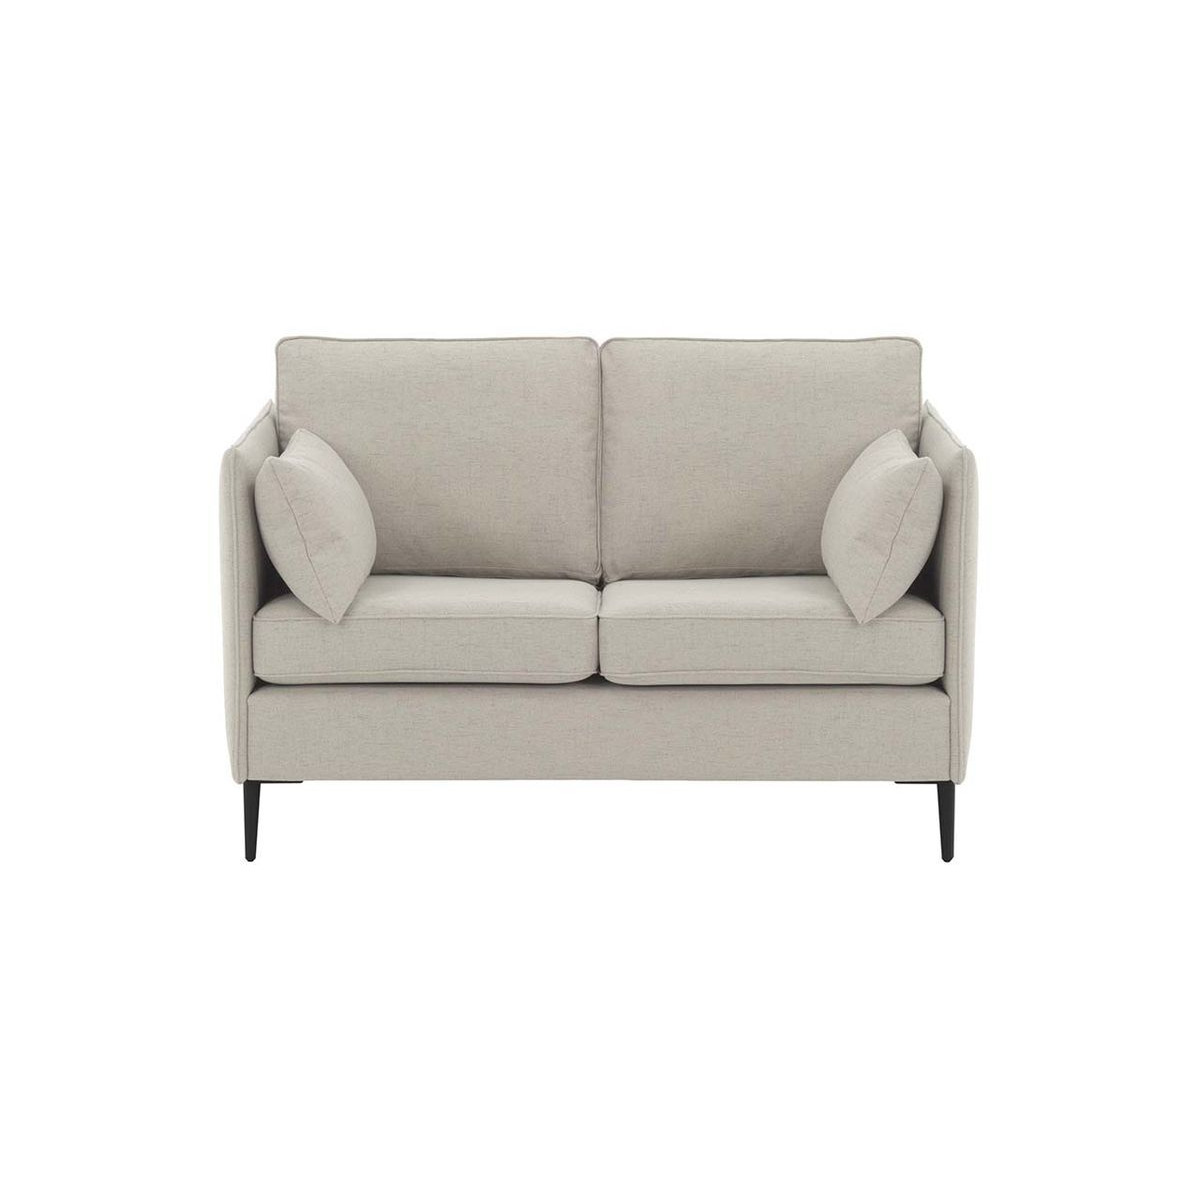 Tasna 2 Seater Sofa, white - image 1